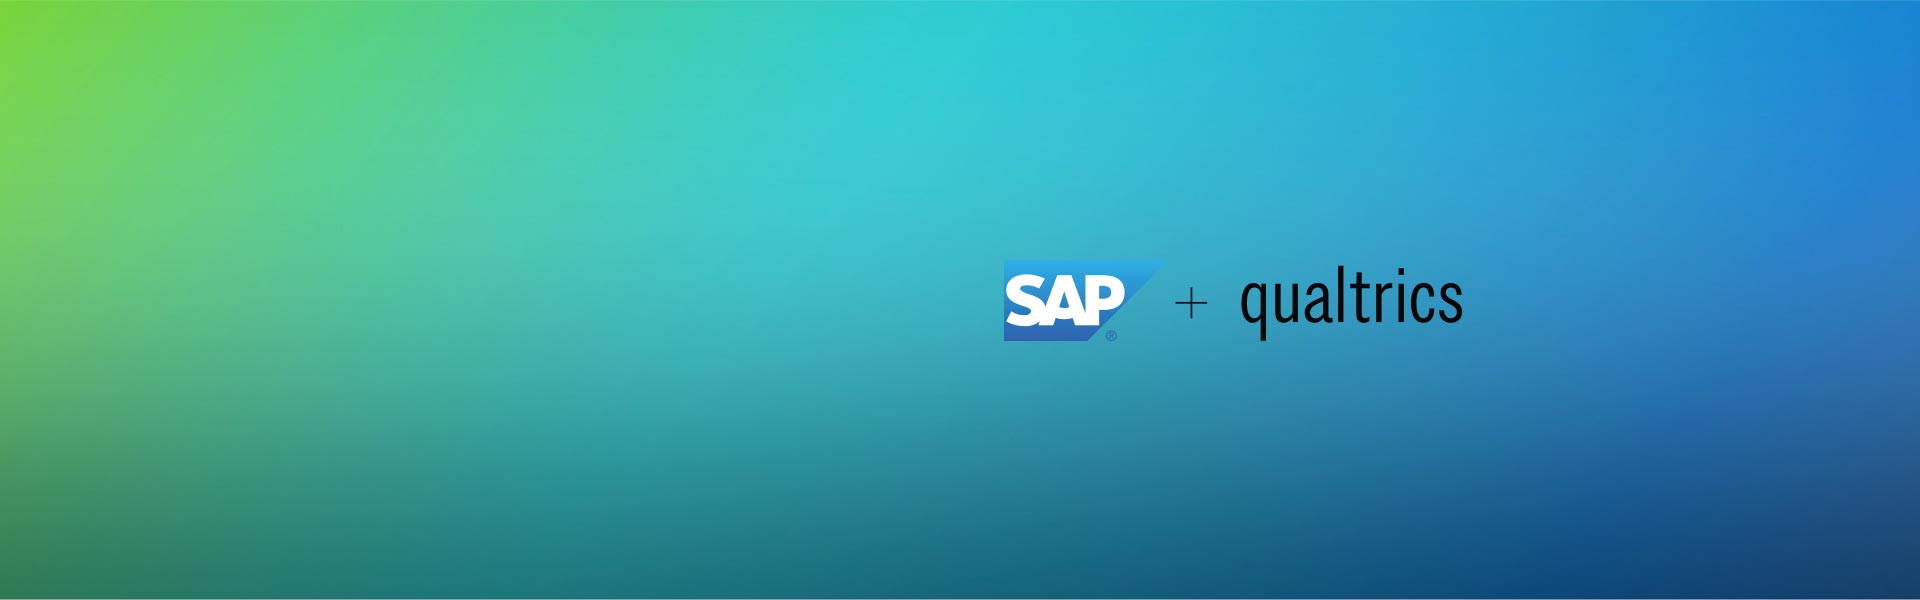 SAP Completes Acquisition of Qualtrics